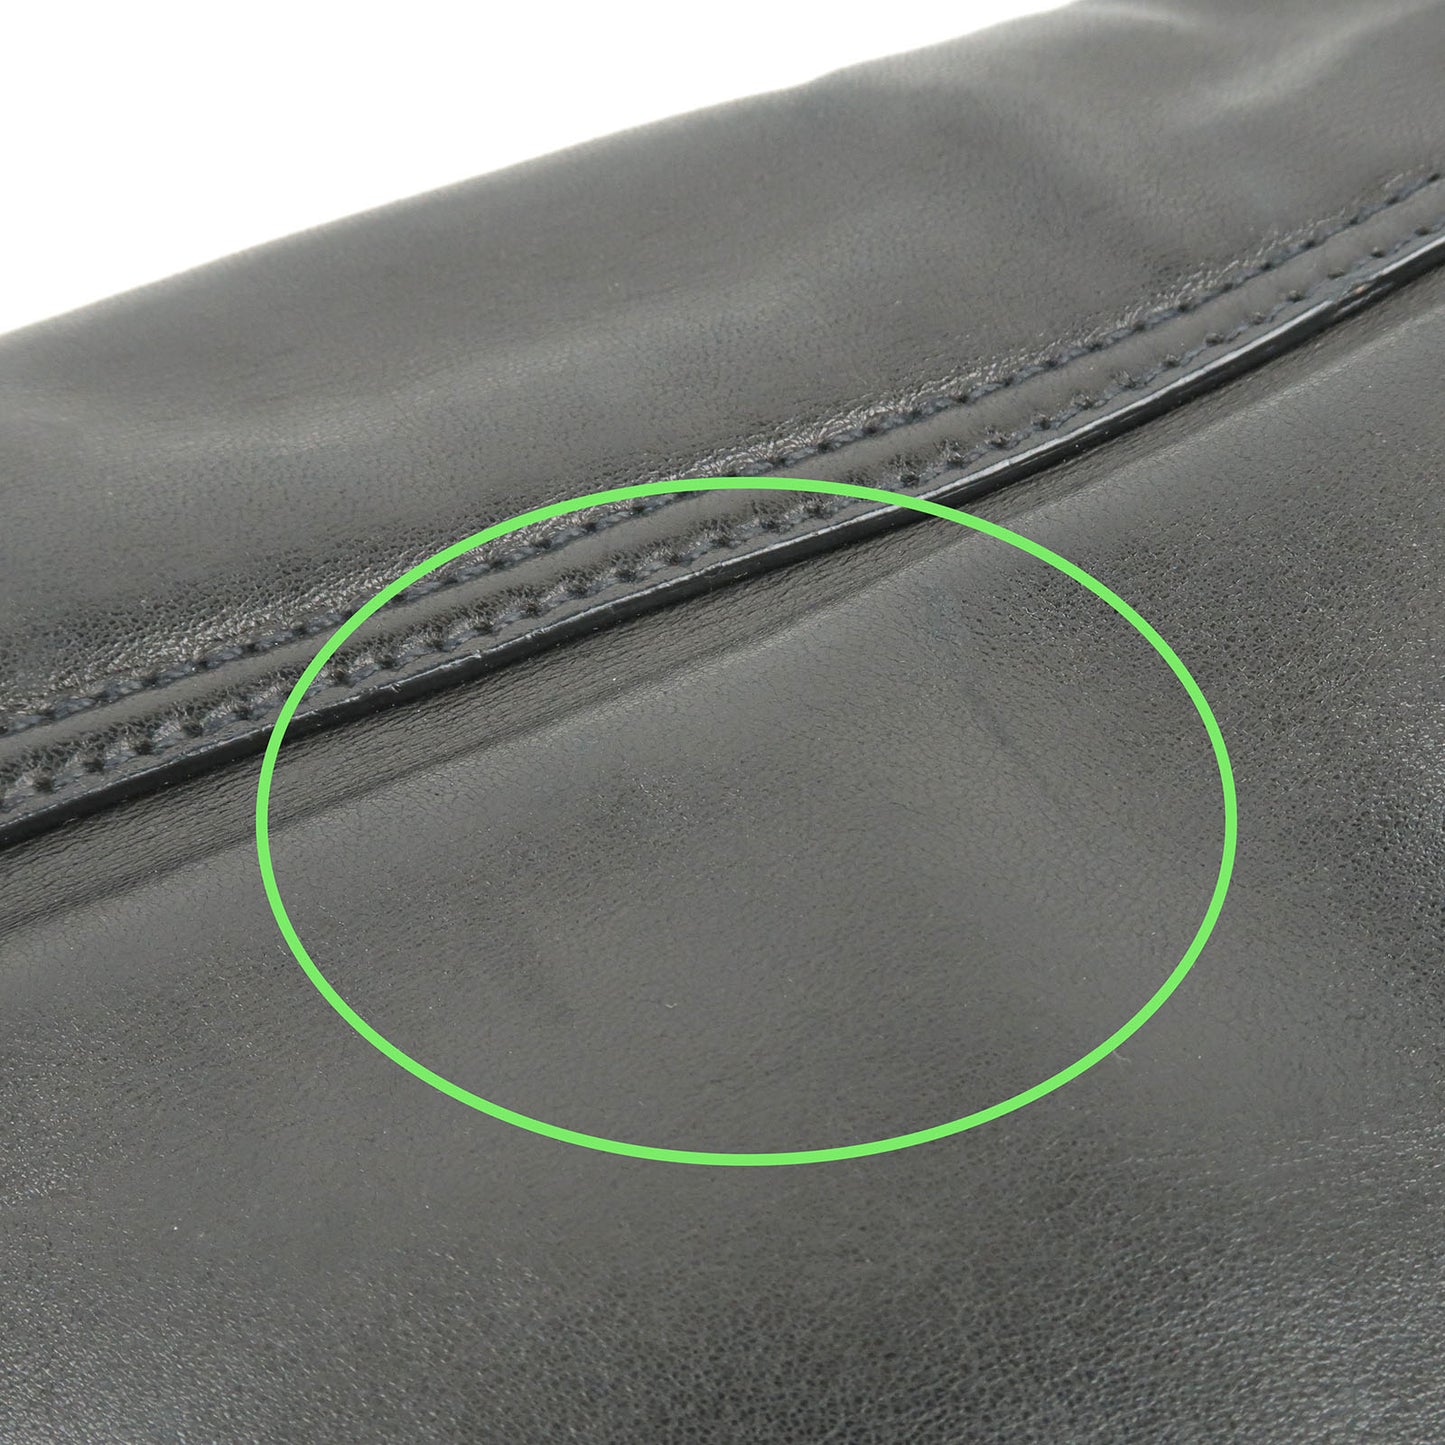 PRADA Leather Shoulder Bag NERO Black